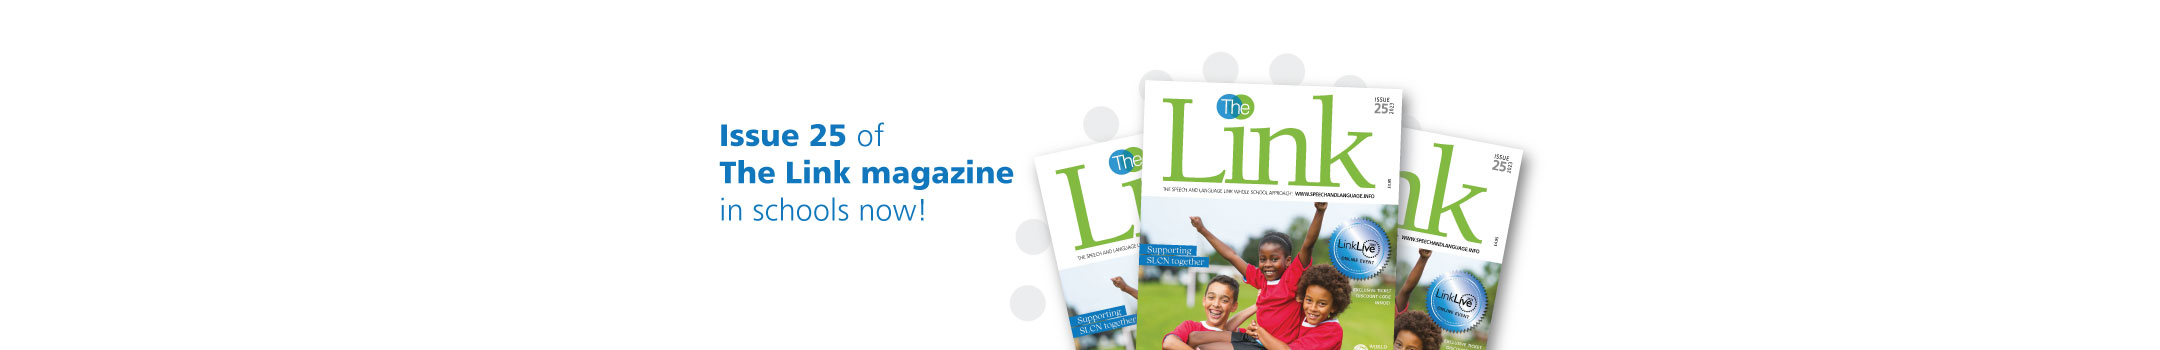 The Link Magazine